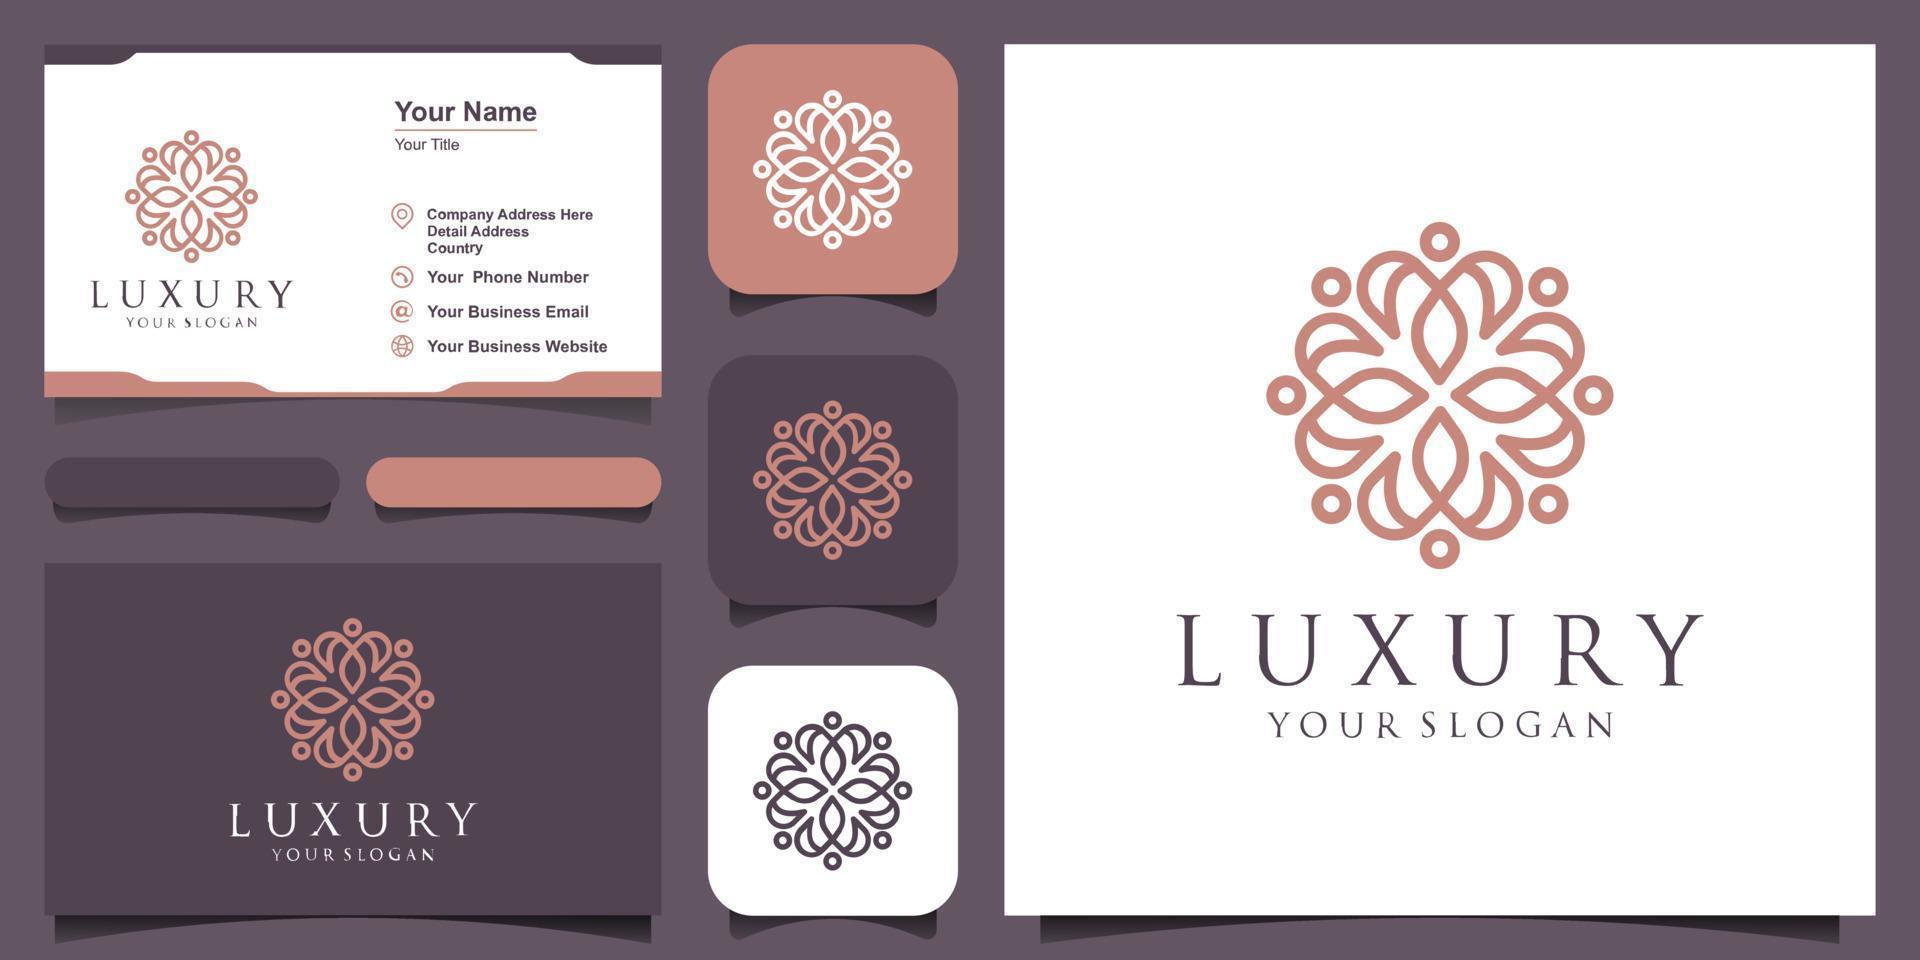 ornament elegant blad logo-ontwerp voor schoonheid, cosmetica, yoga en spa vector